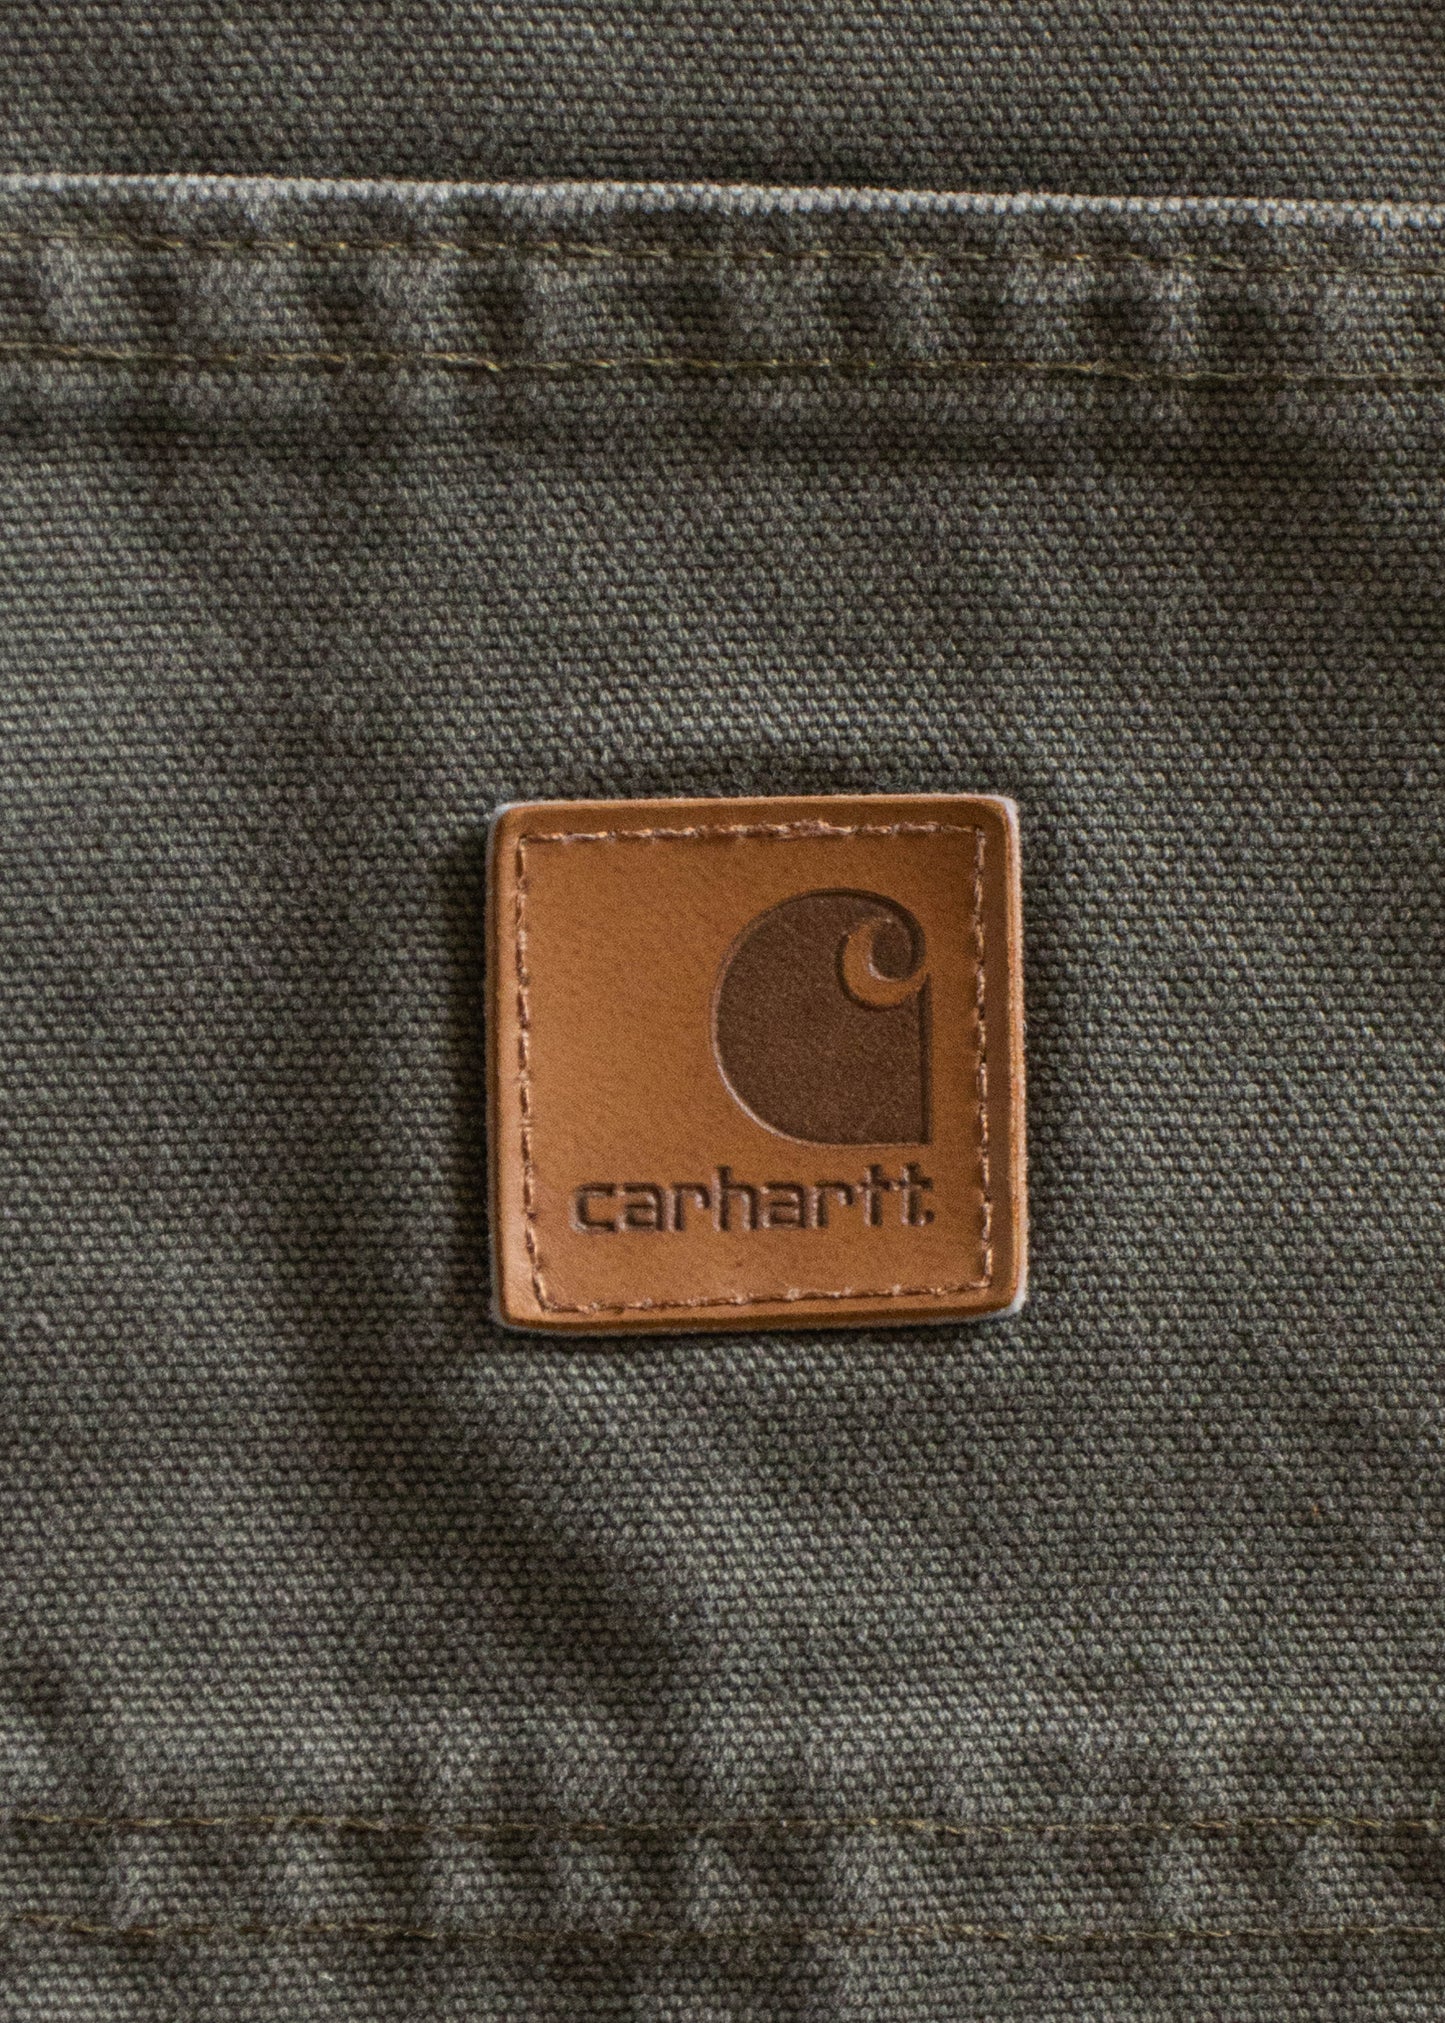 Carhartt Carpenter Pants Size Women's 38 Men's 40